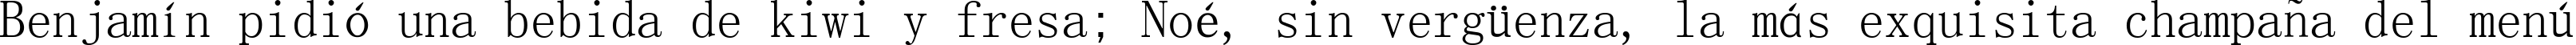 Пример написания шрифтом SimSun текста на испанском